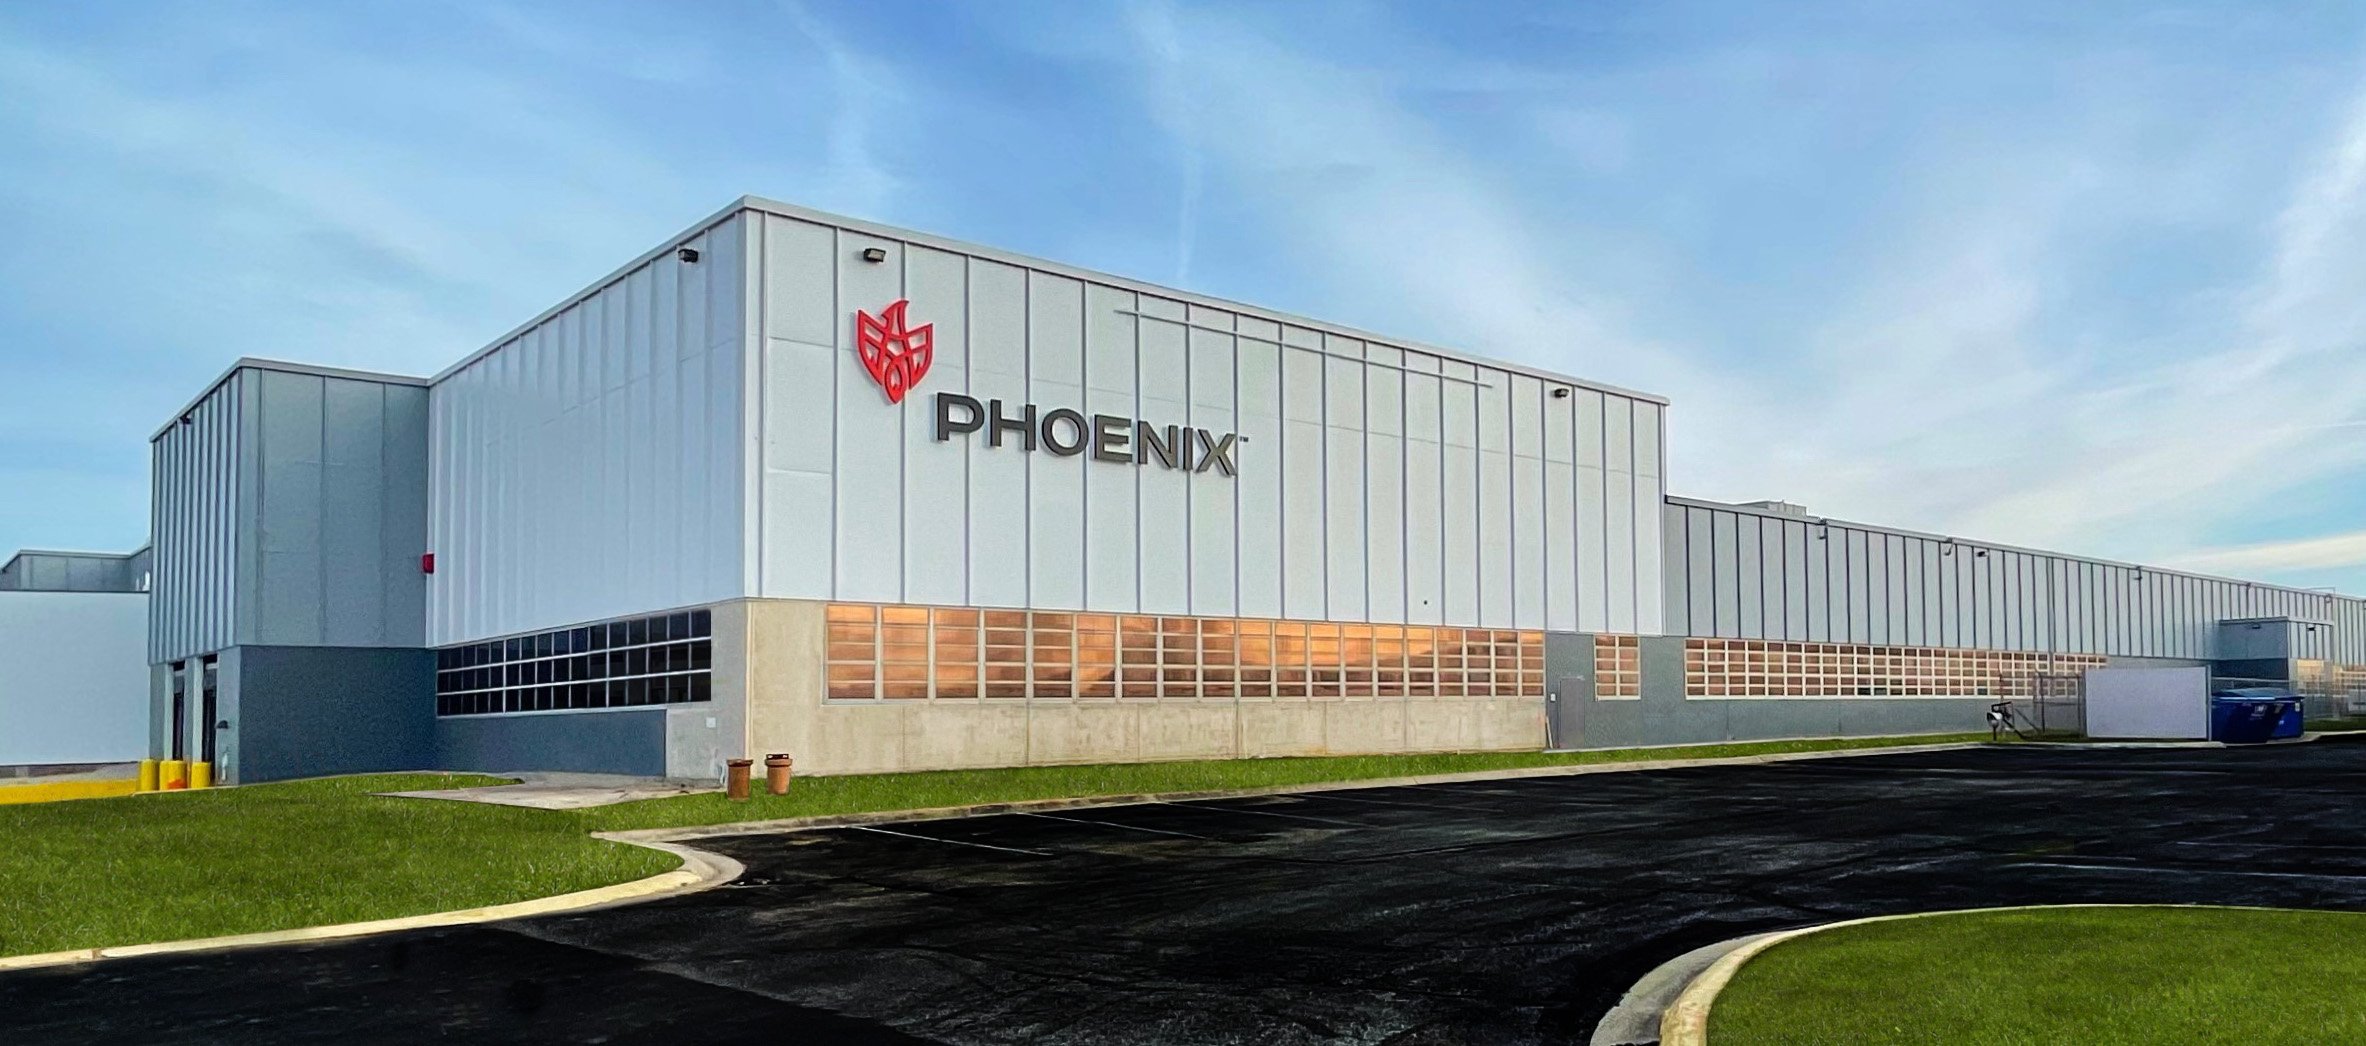 PRESS RELEASE: PHOENIX Opens New Plant in Bloomington, IN